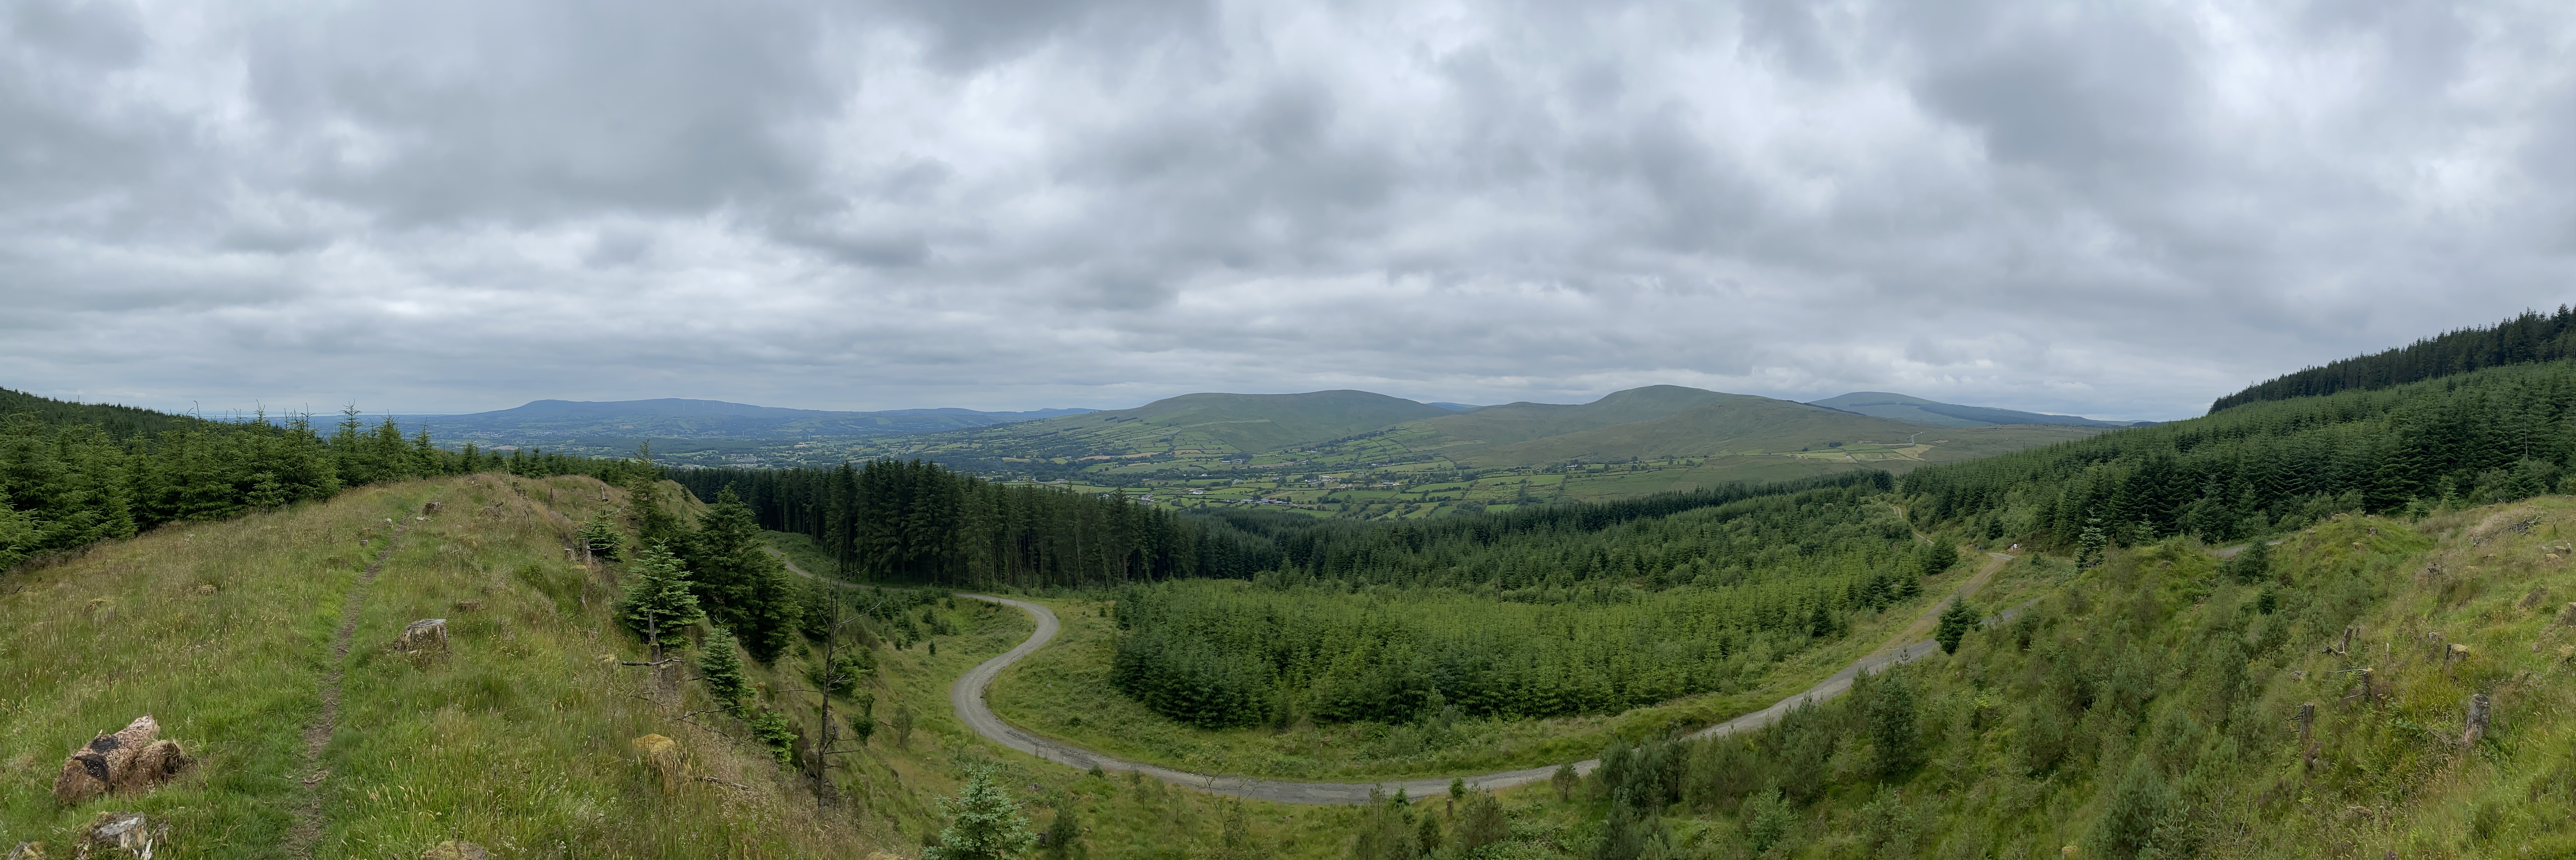 Ireland hills